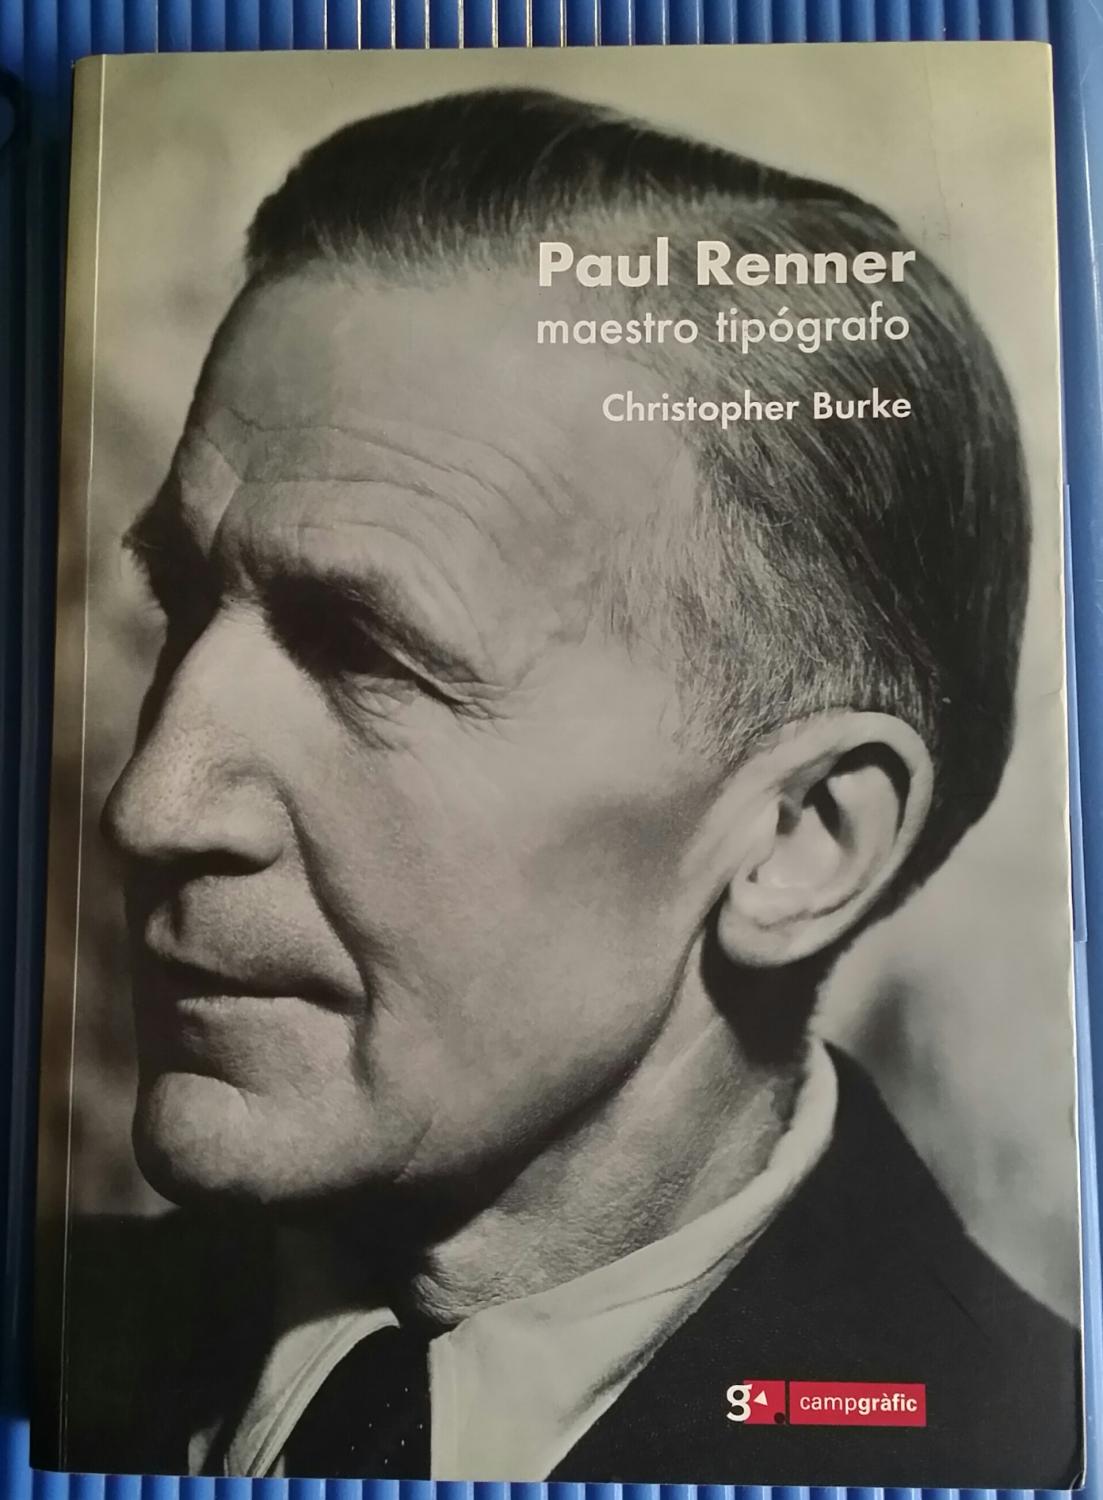 Paul Renner maestro tipografico - Christopher burke